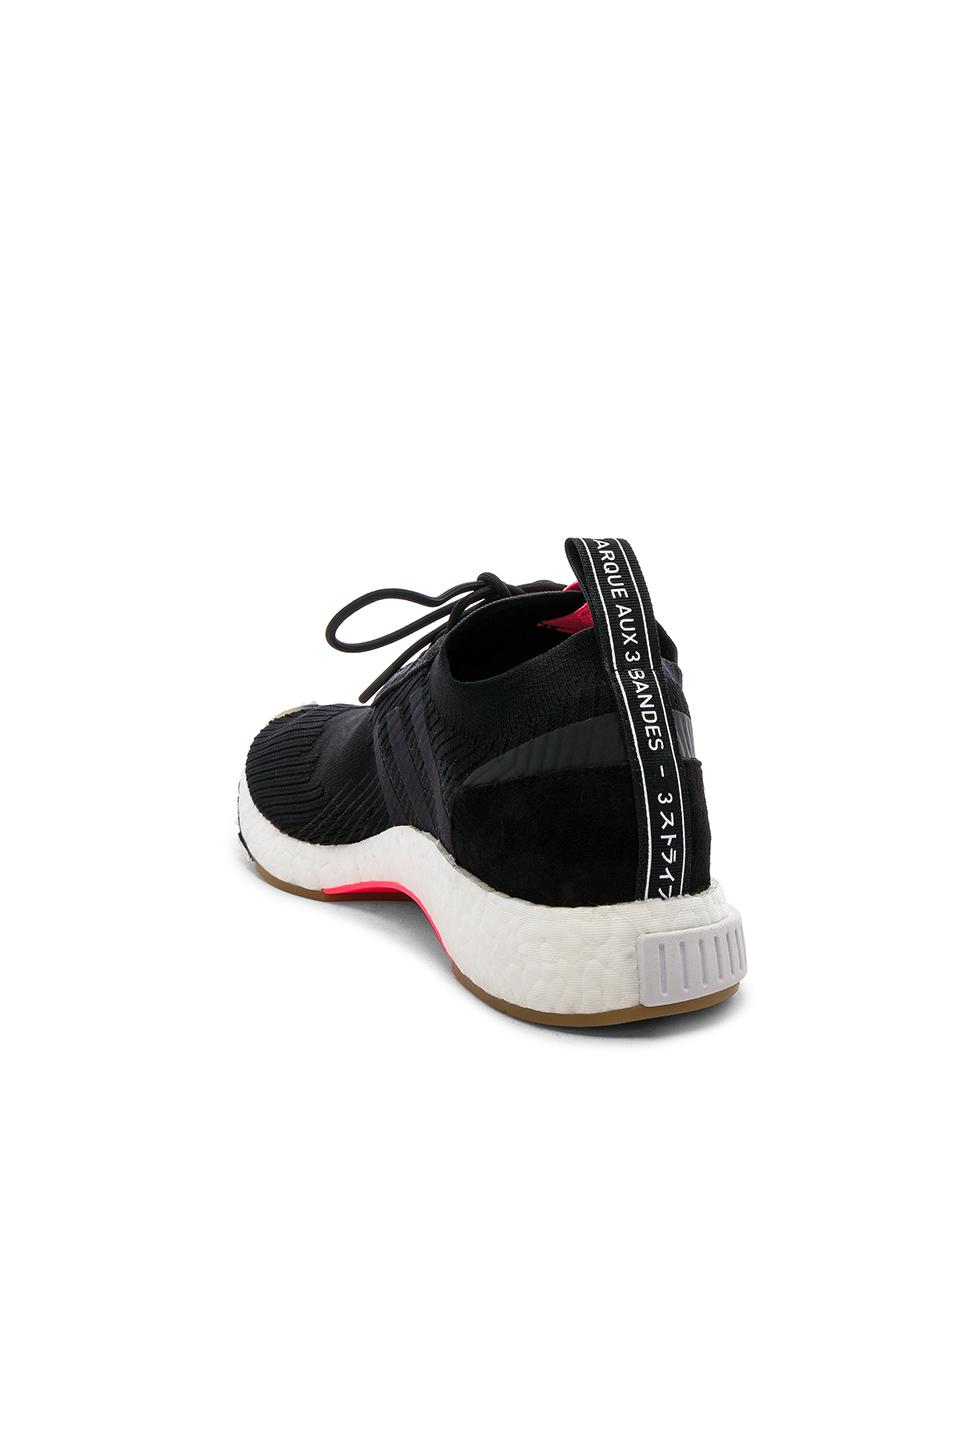 Shoes Black White Unisex Adidas Nmd Xr1 Winter Bz0637